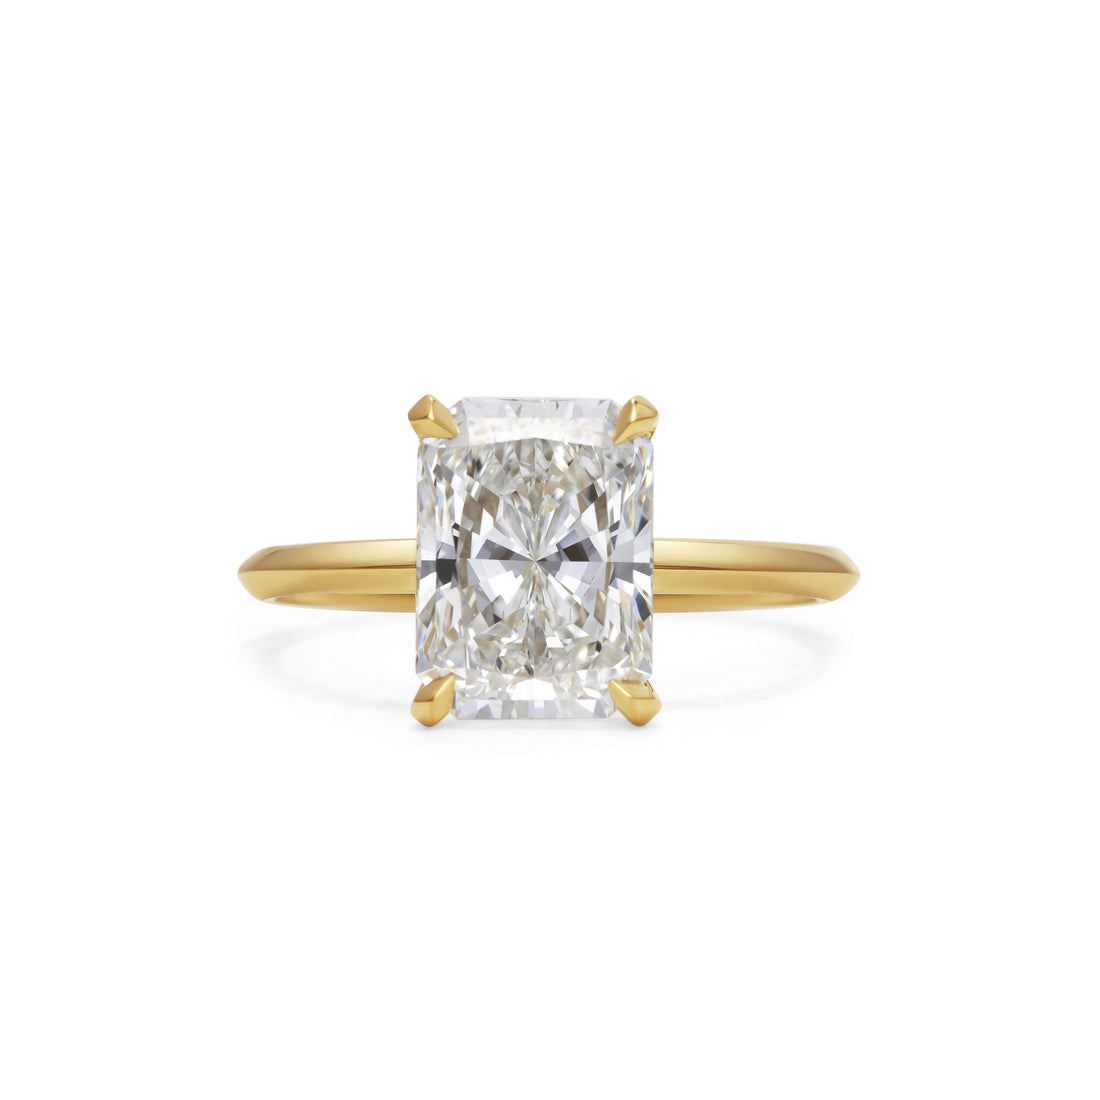  Radiant Cut Diamond Solitaire Ring by Rachel Boston | The Cut London